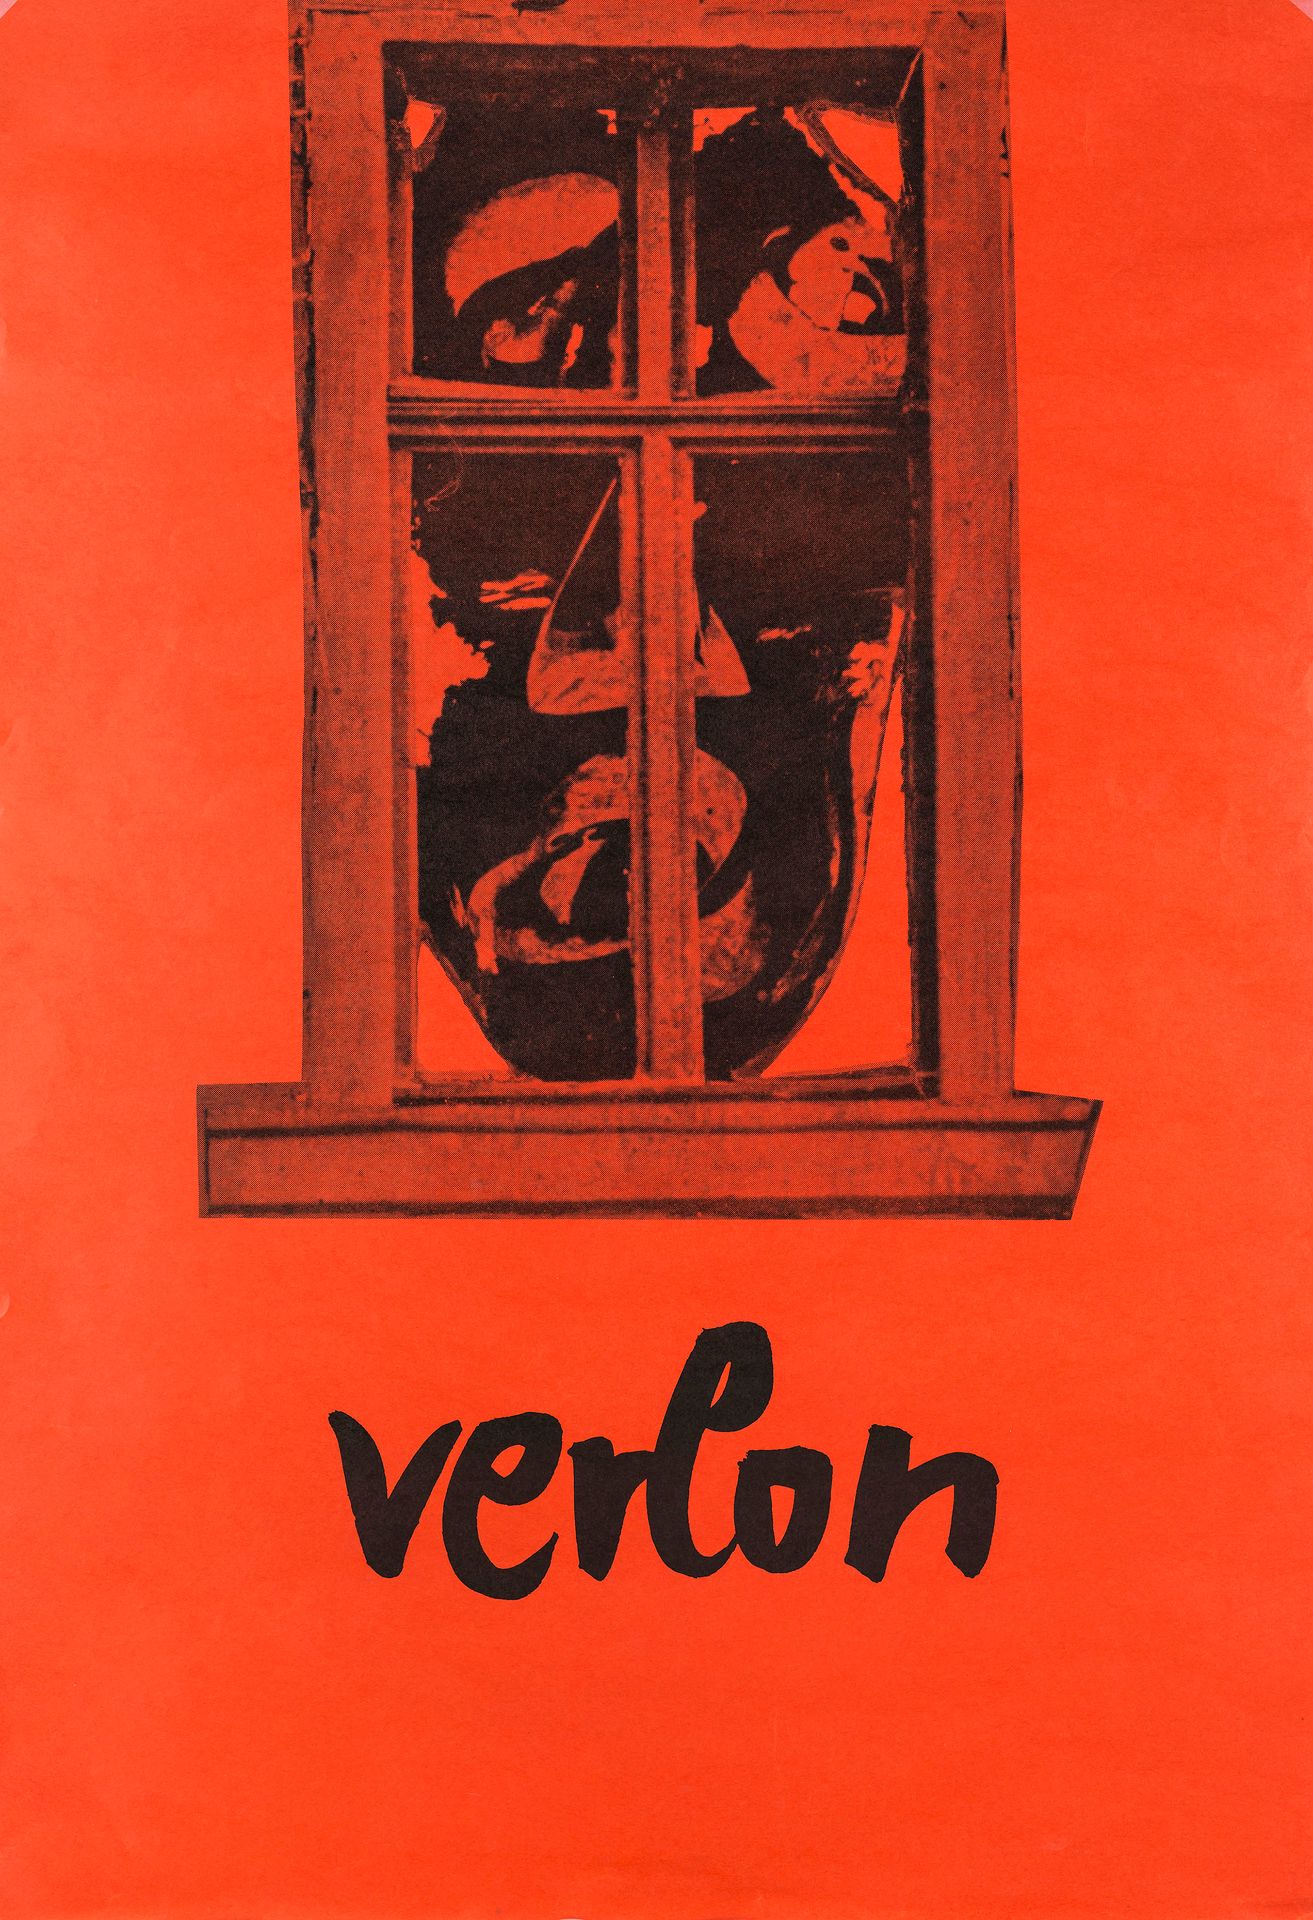 Plakat. – André Verlon 海报。-安德烈-维隆（d. I. 维利-萨利，1917-1993）。海报。插图窗口下的字体verlon交叉。红纸胶&hellip;